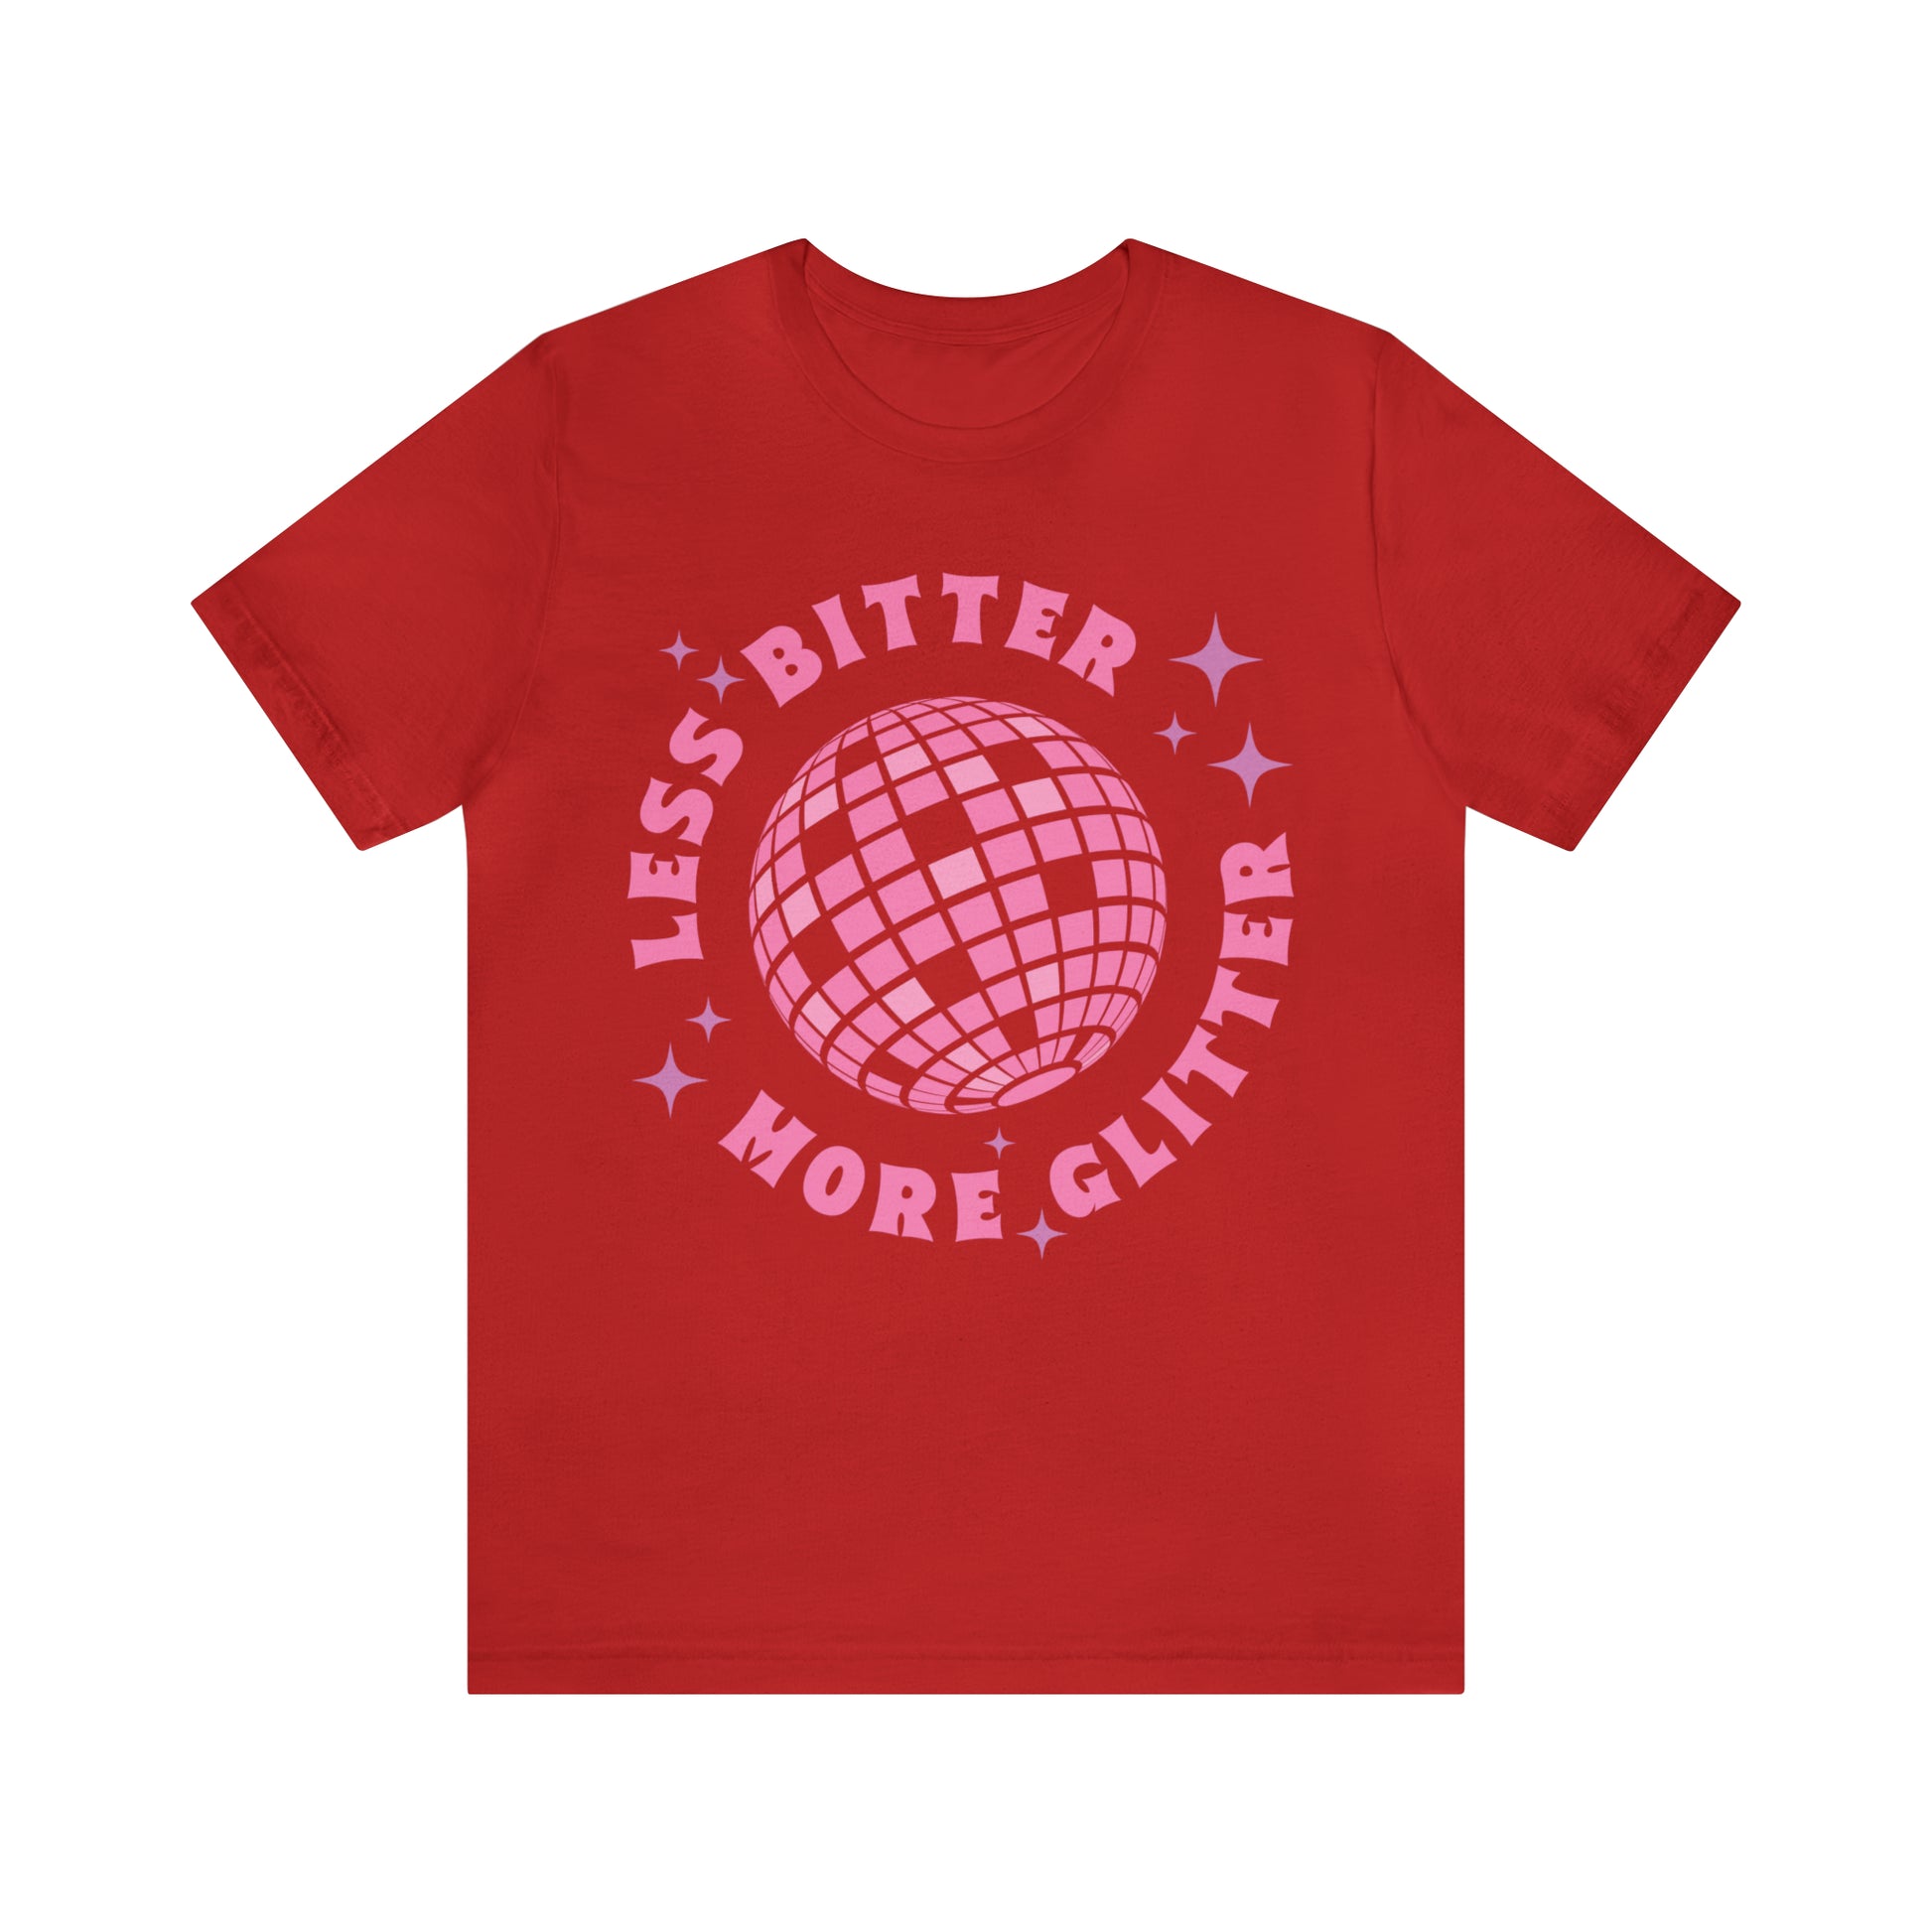 Less Bitter More Glitter, Funny Sarcastic Shirt for Girls